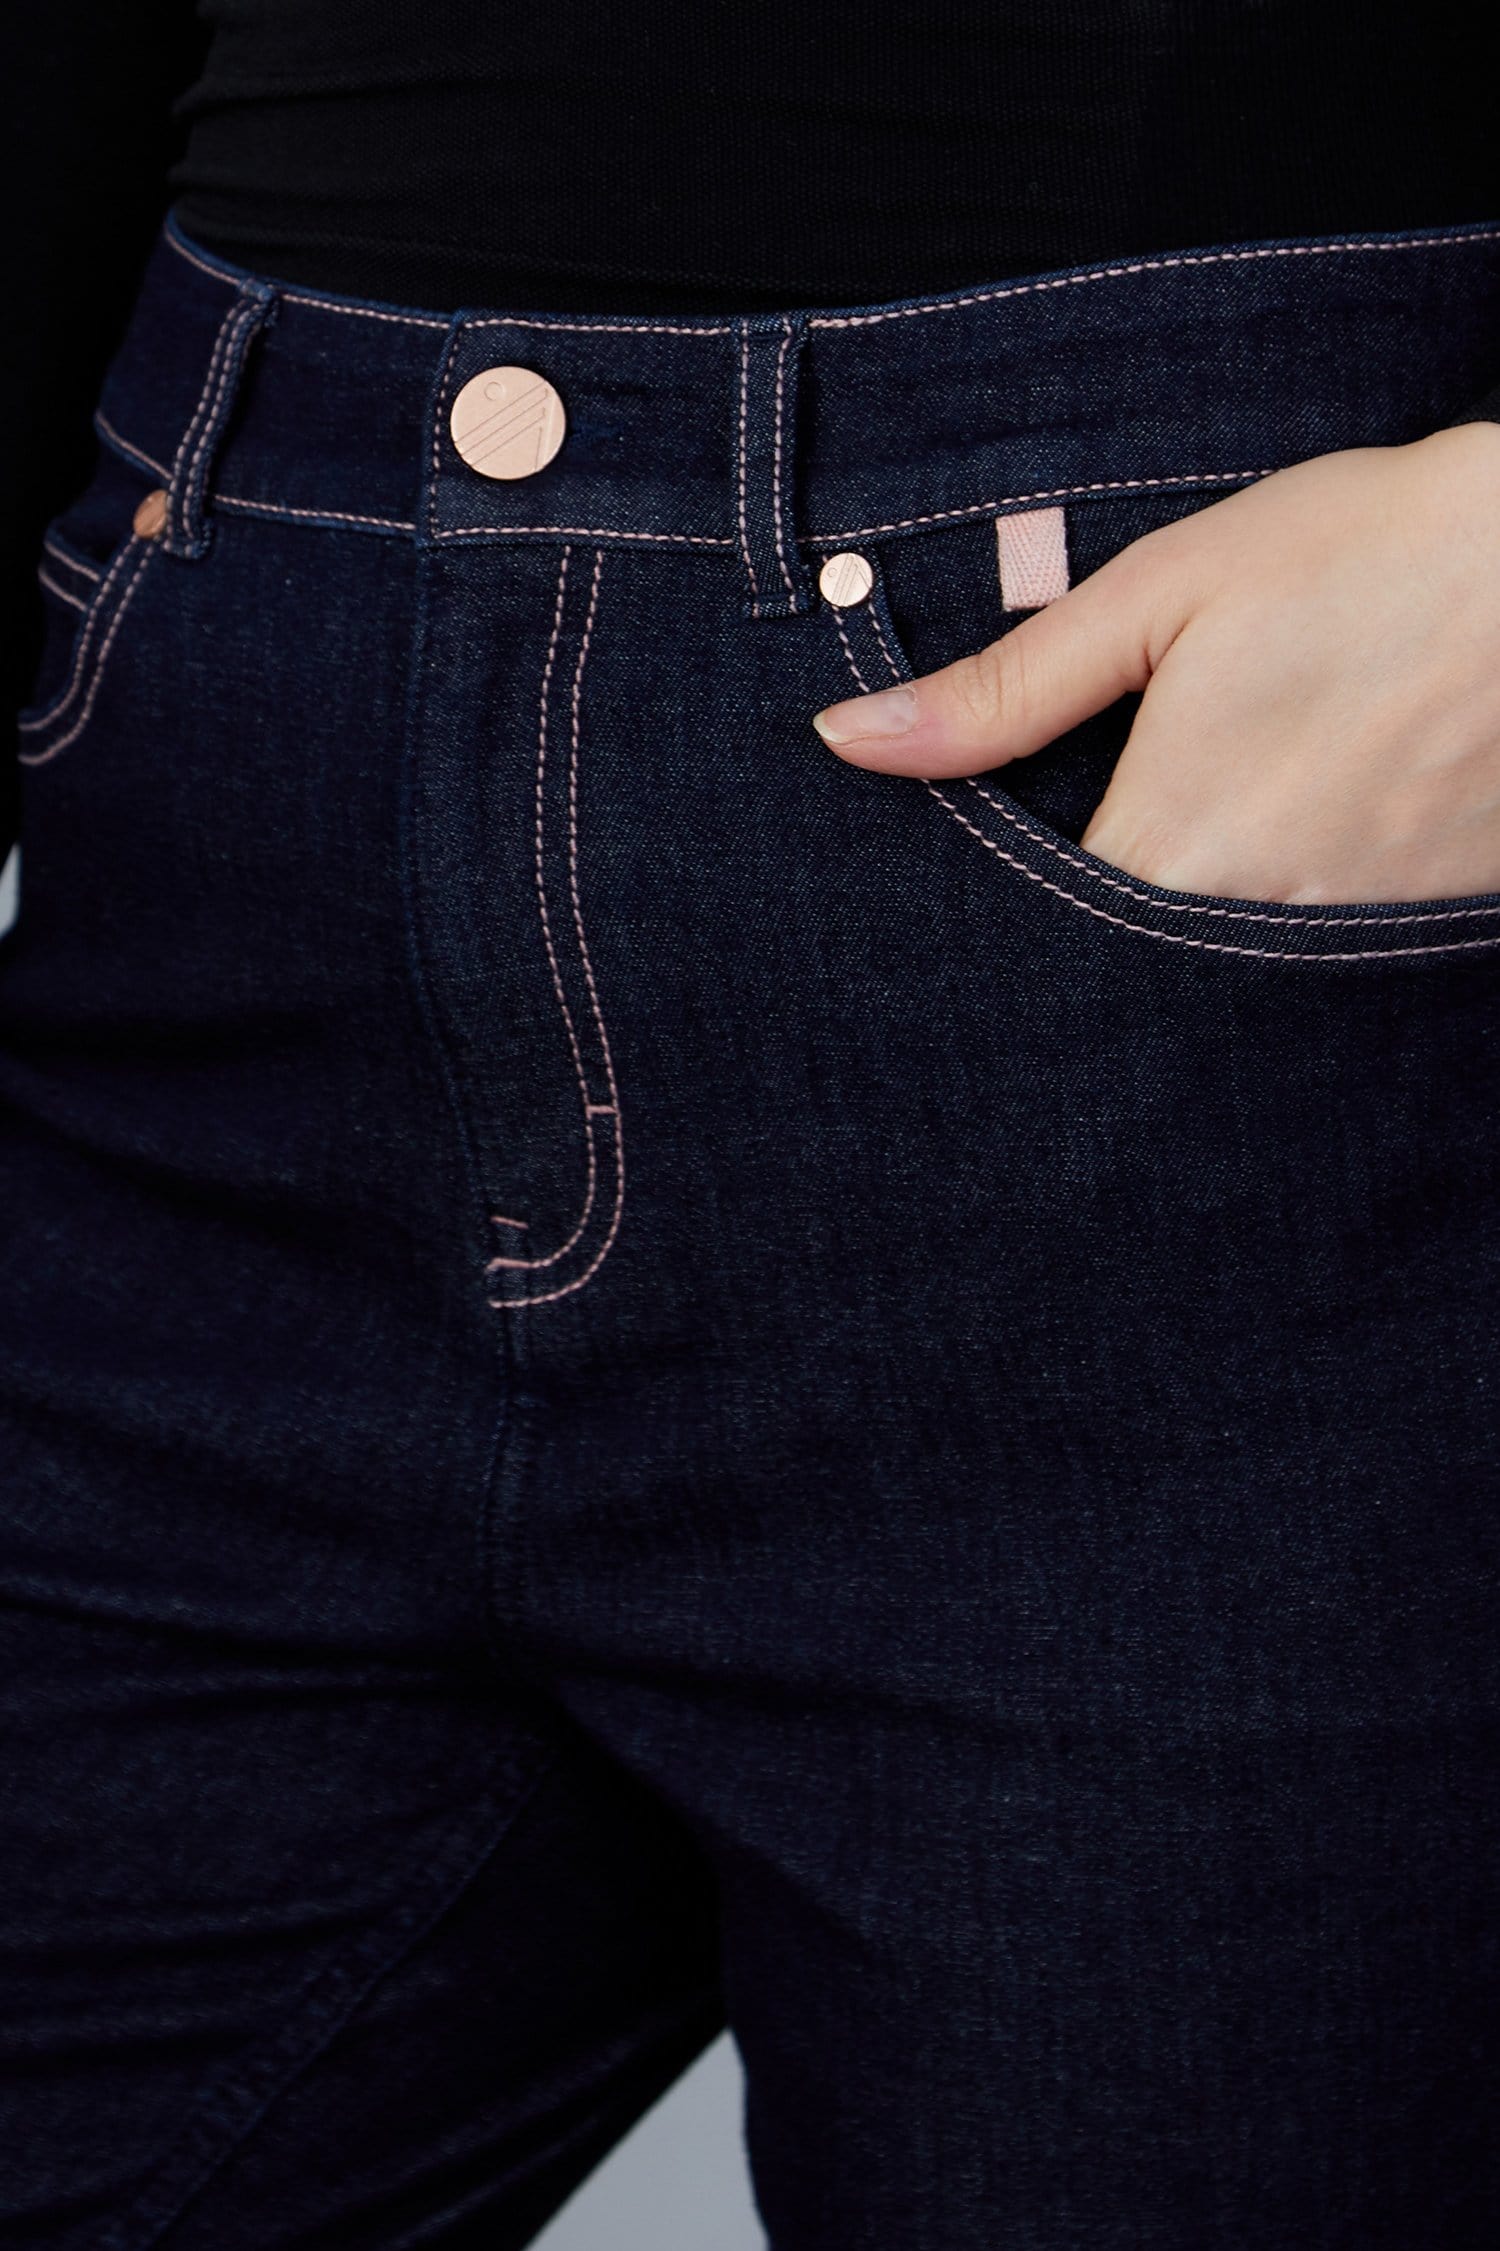 The Outdoor Slim Fit Jeans - Dark Blue Denim Trousers  